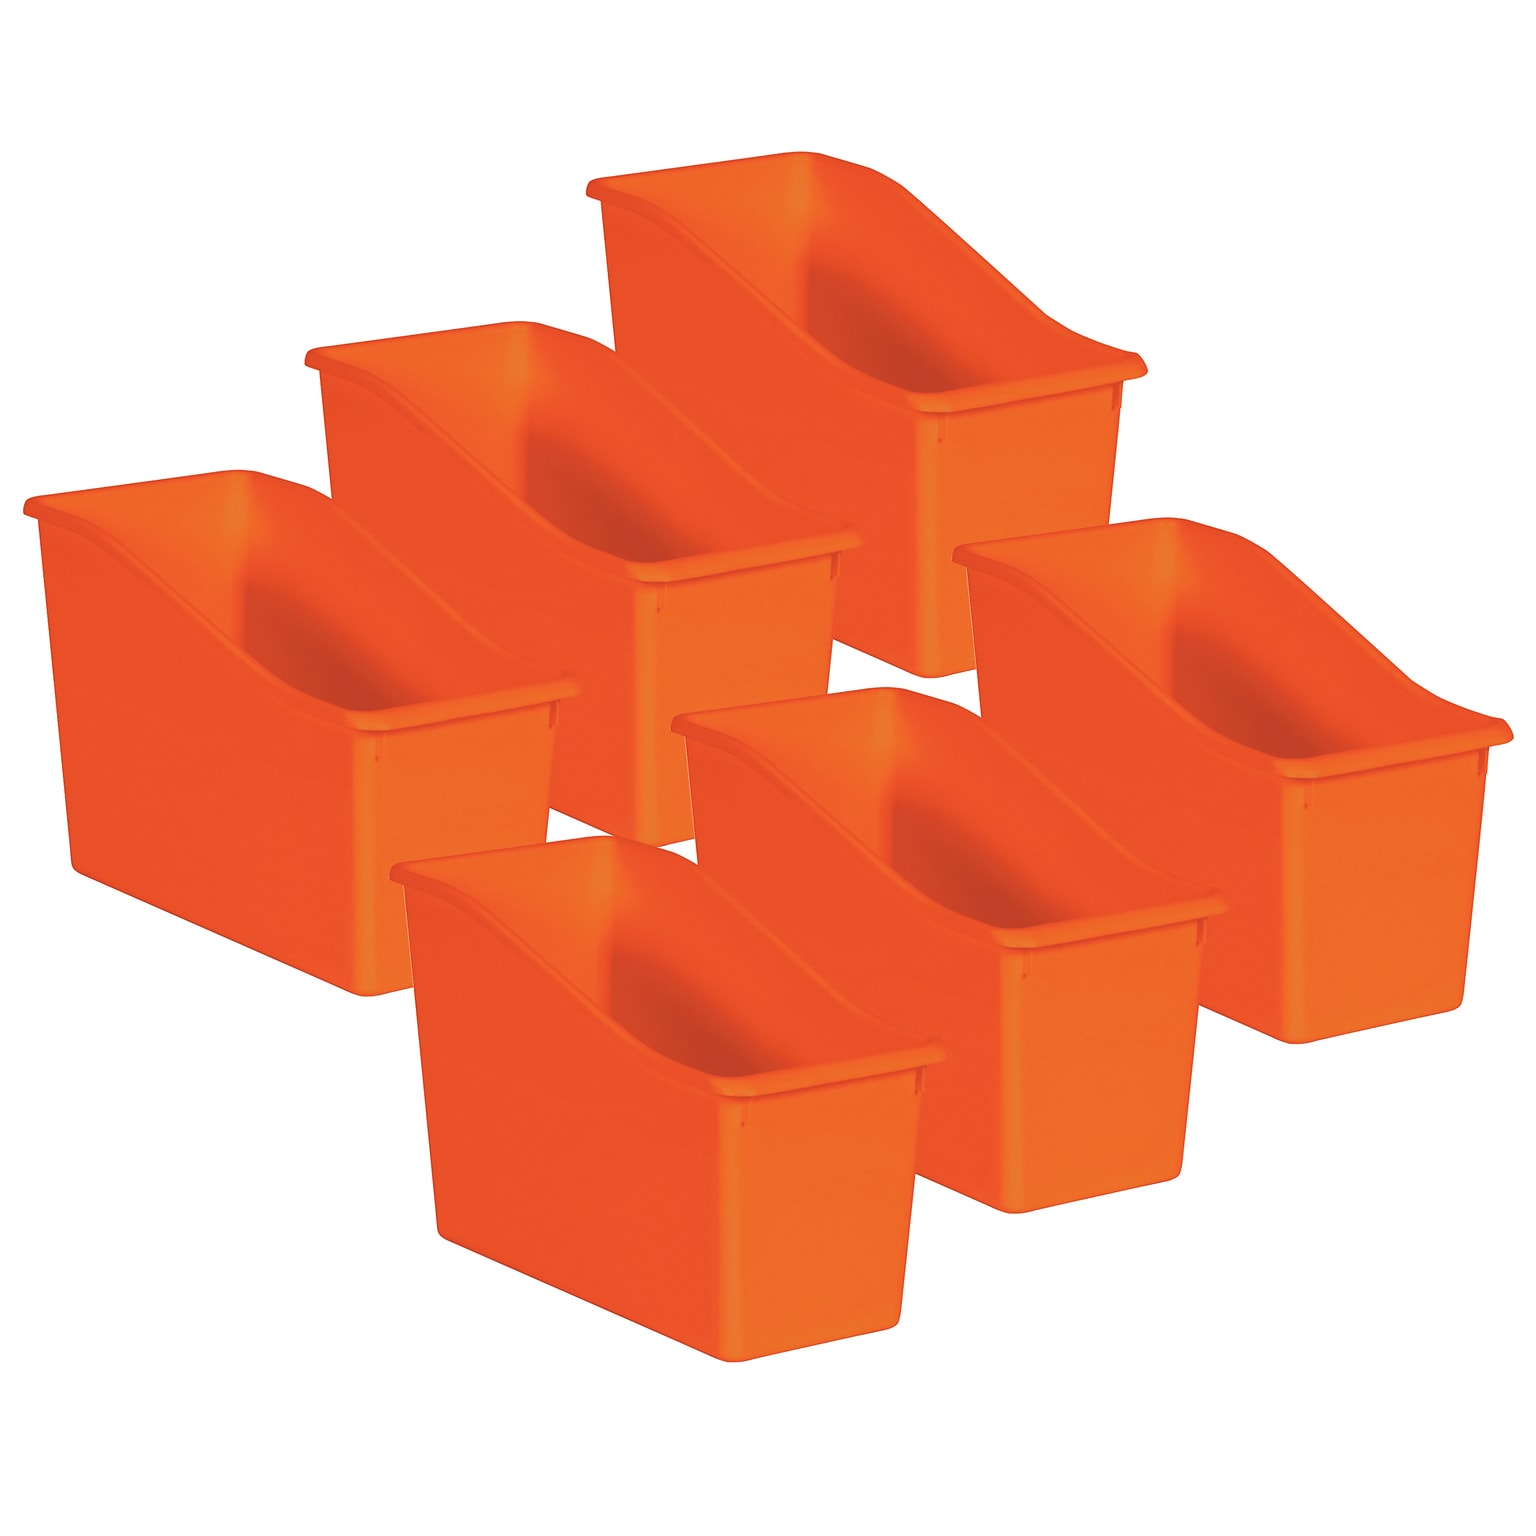 Teacher Created Resources® Plastic Book Bin, 5.5 x 11.38 x 7.5, Orange, Pack of 6 (TCR20424-6)